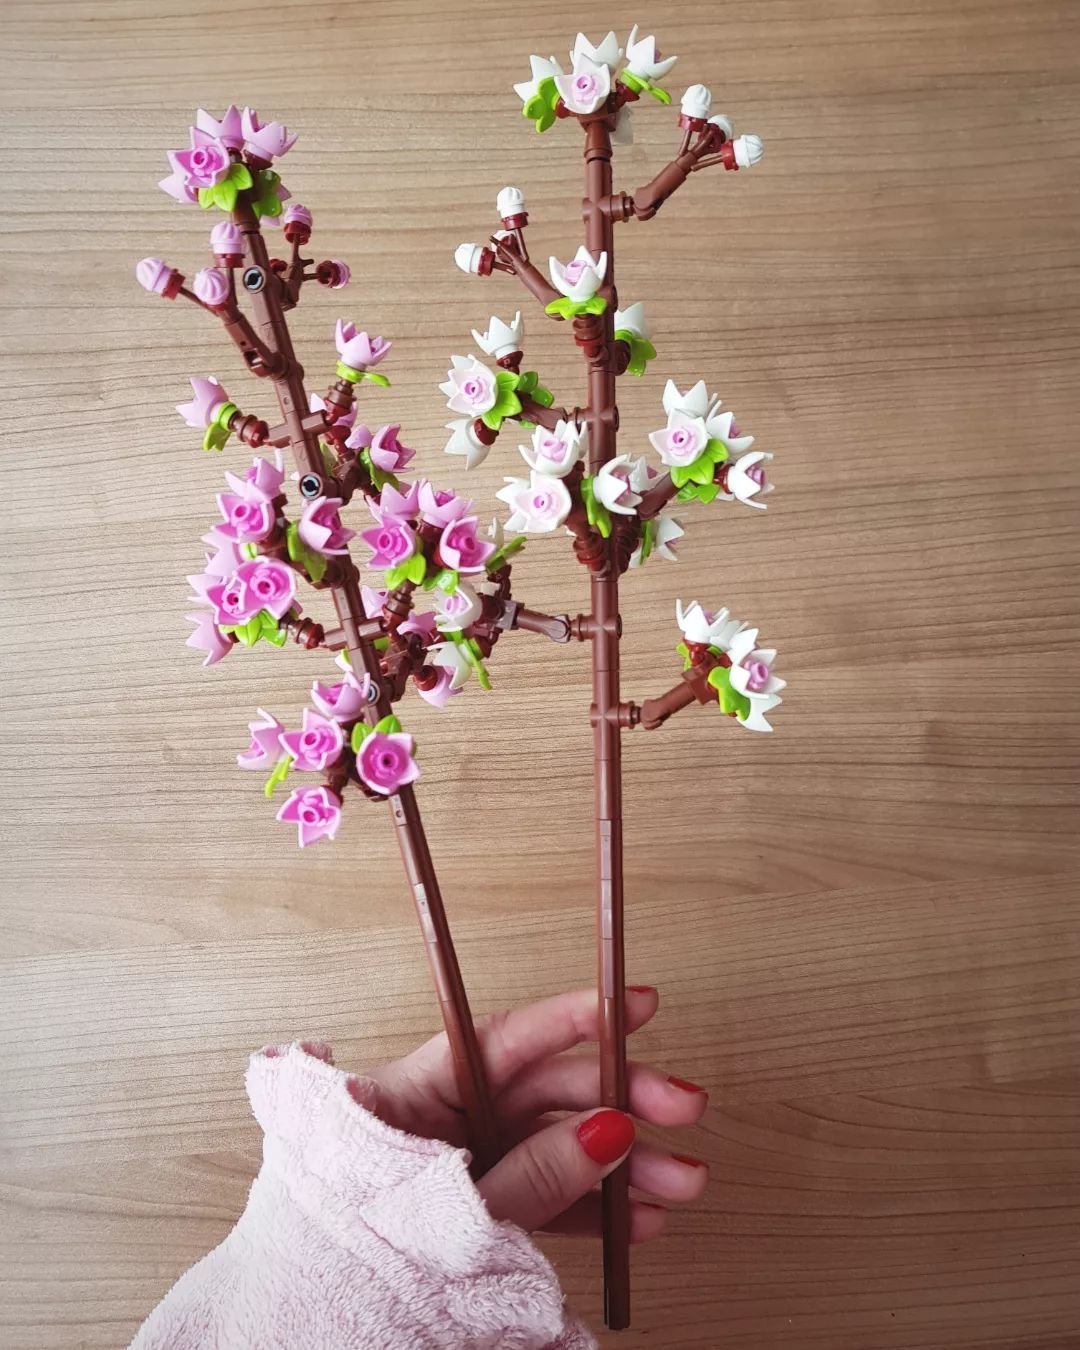 Sunday afternoon. 🌧 Sakura LEGO flowers. 🌸 

#sunday #lego #legoflowers #sakura #cherryblossoms #mobach #ceramics #mobachvase #passingtime